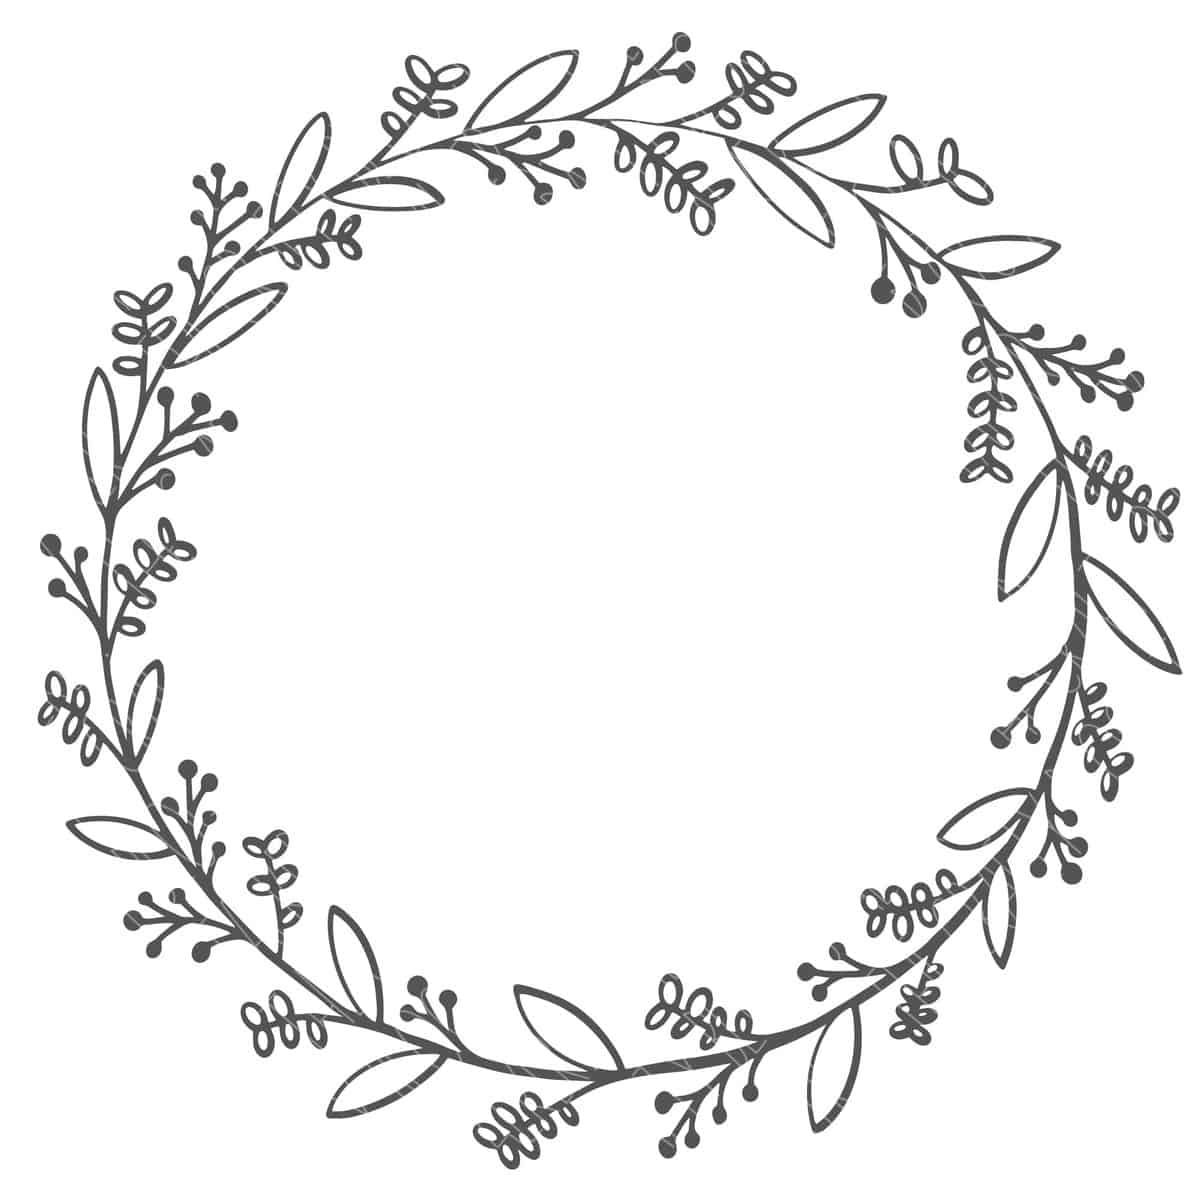 Hand Drawn Wreath SVG - The Crafty Blog Stalker